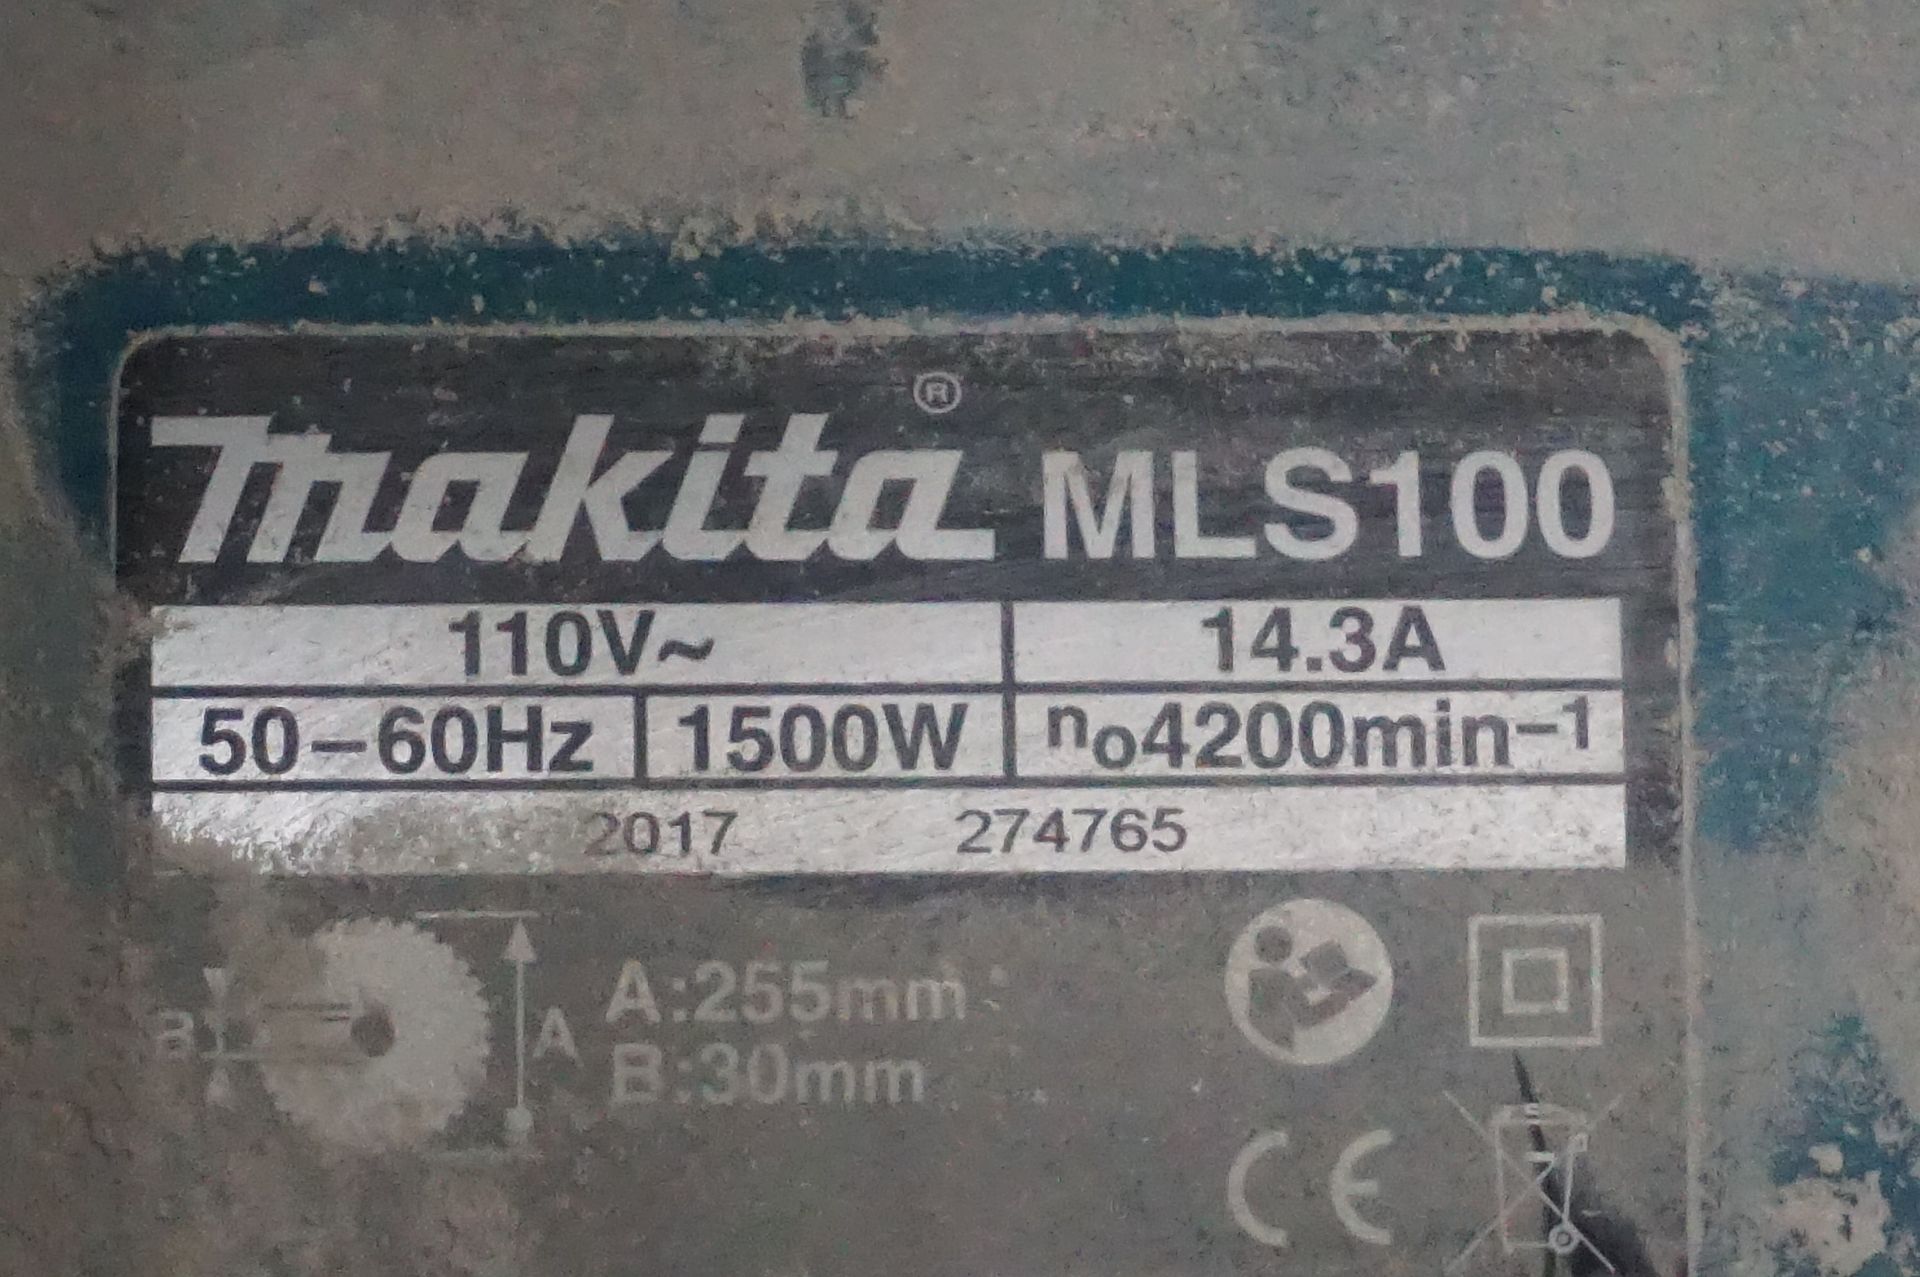 Makita, ML5100 mitre saw, 110v together with Makita, HS0600 circular saw, 110v (DOM: 2017) - Image 5 of 6